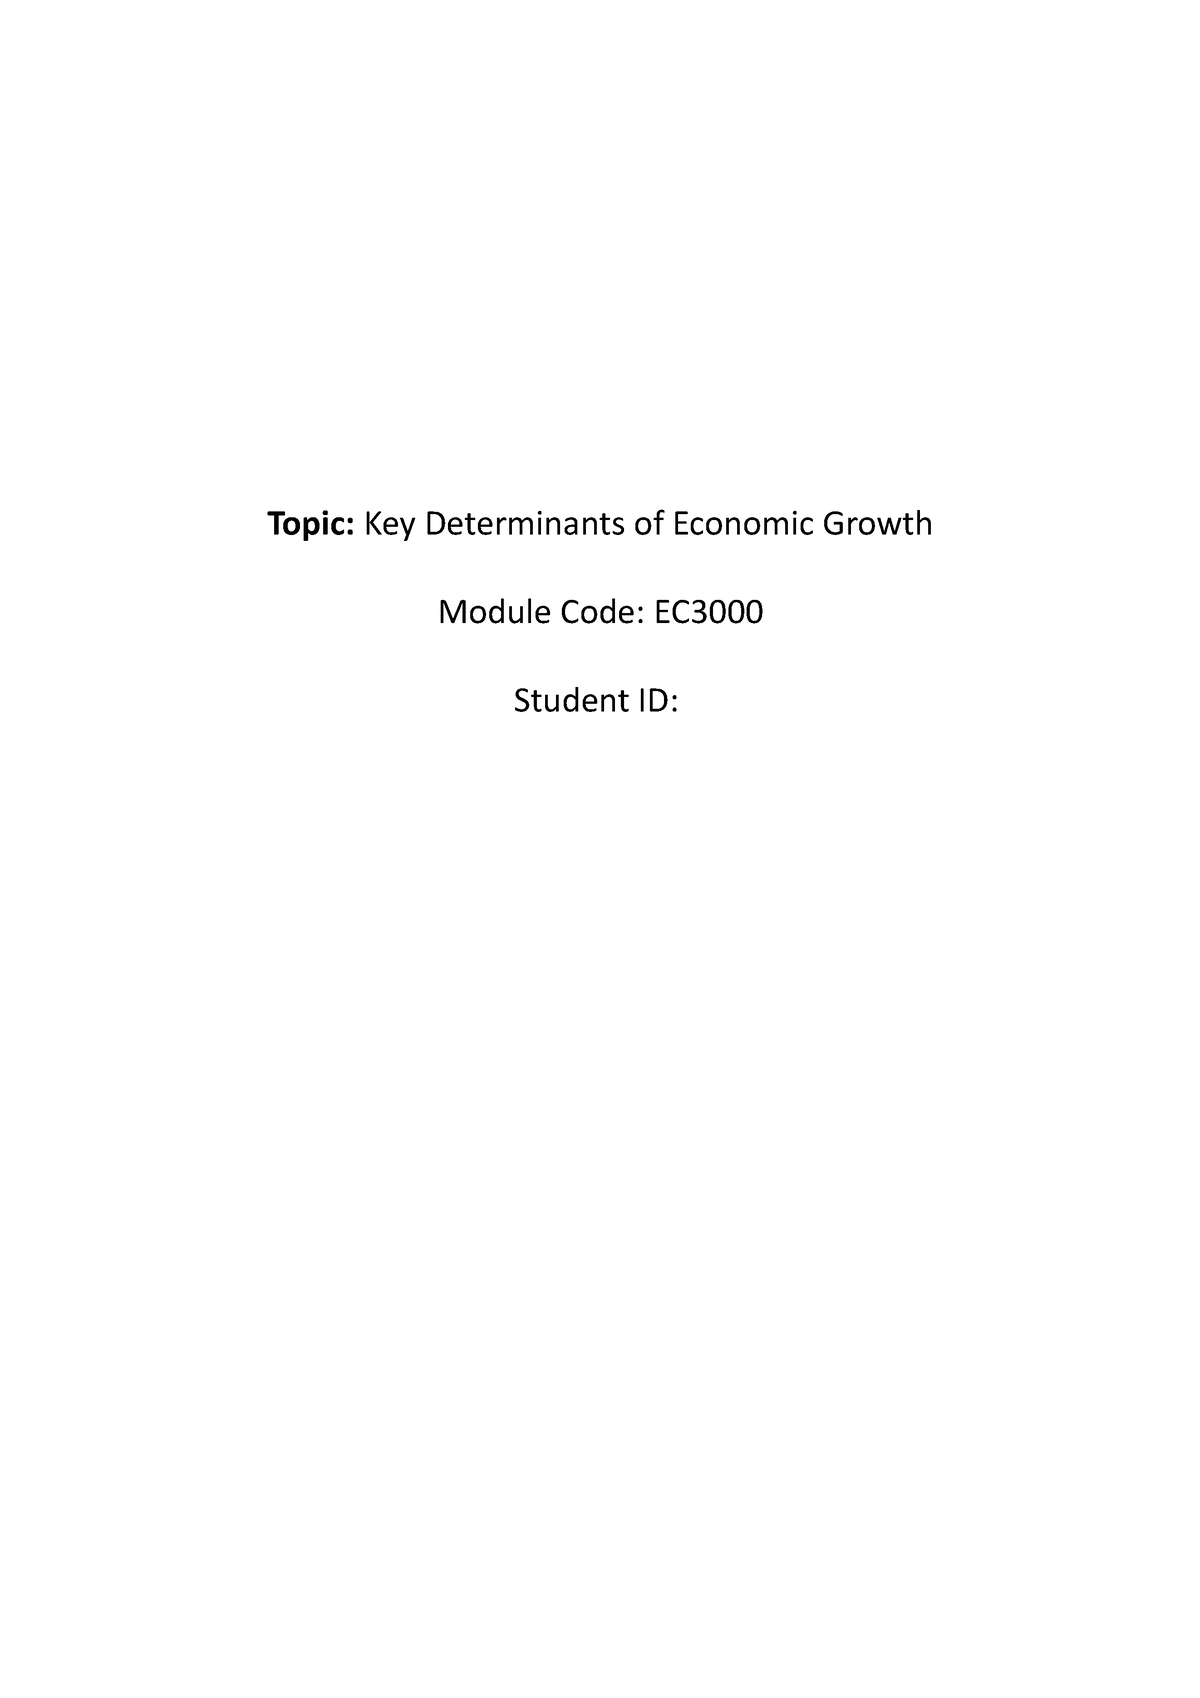 economic growth dissertation